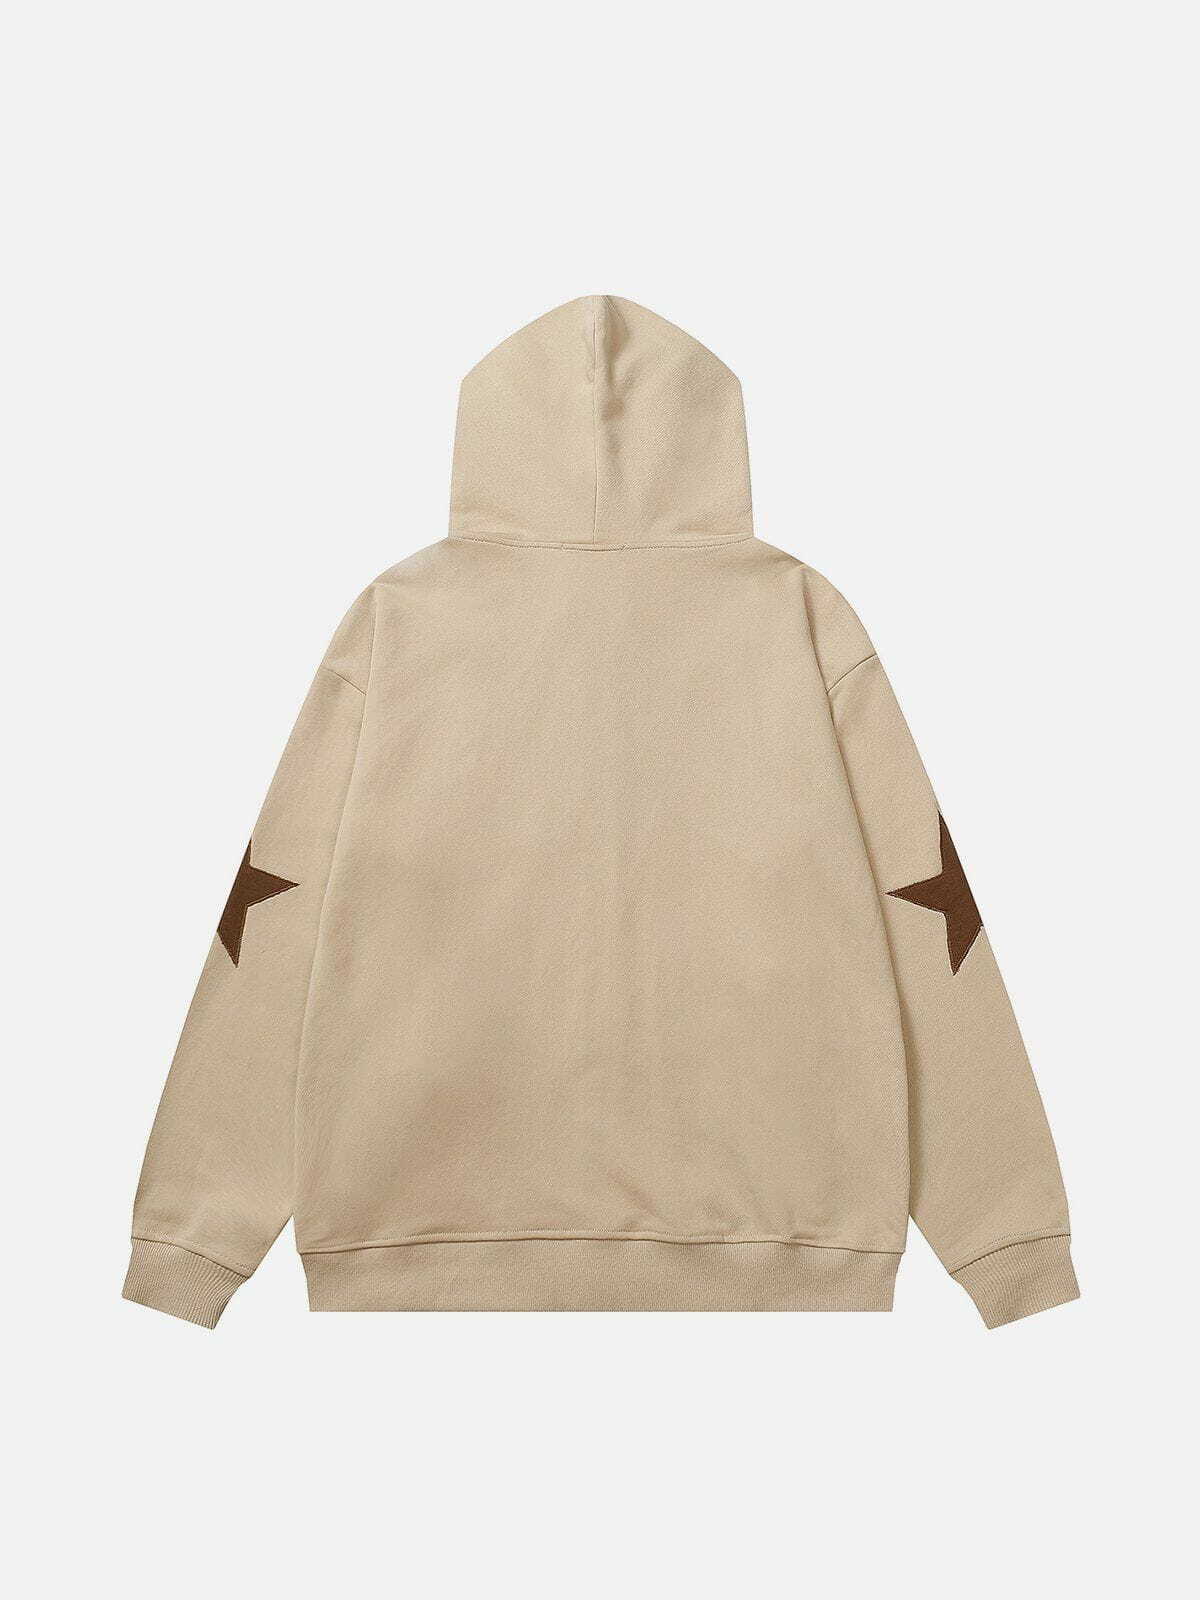 dynamic star graphic hoodie edgy streetwear 4615